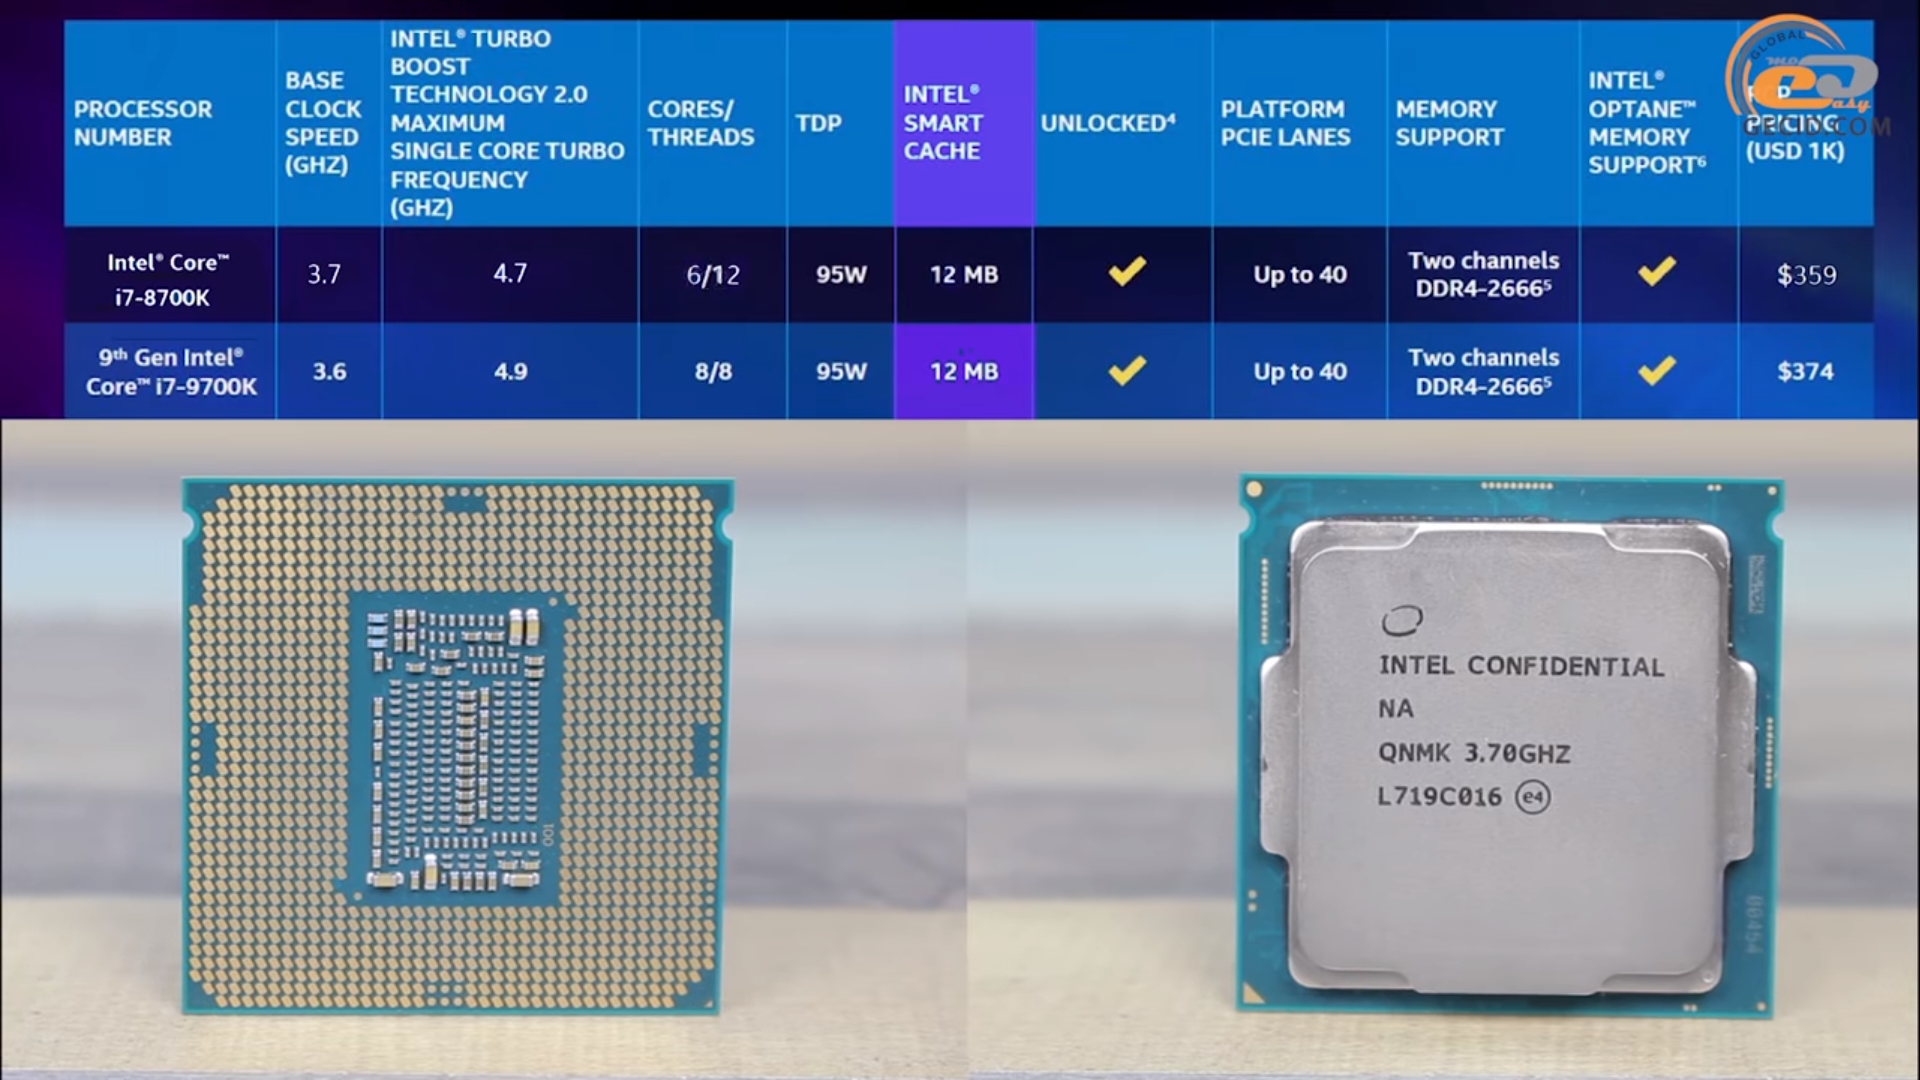 Intel a6